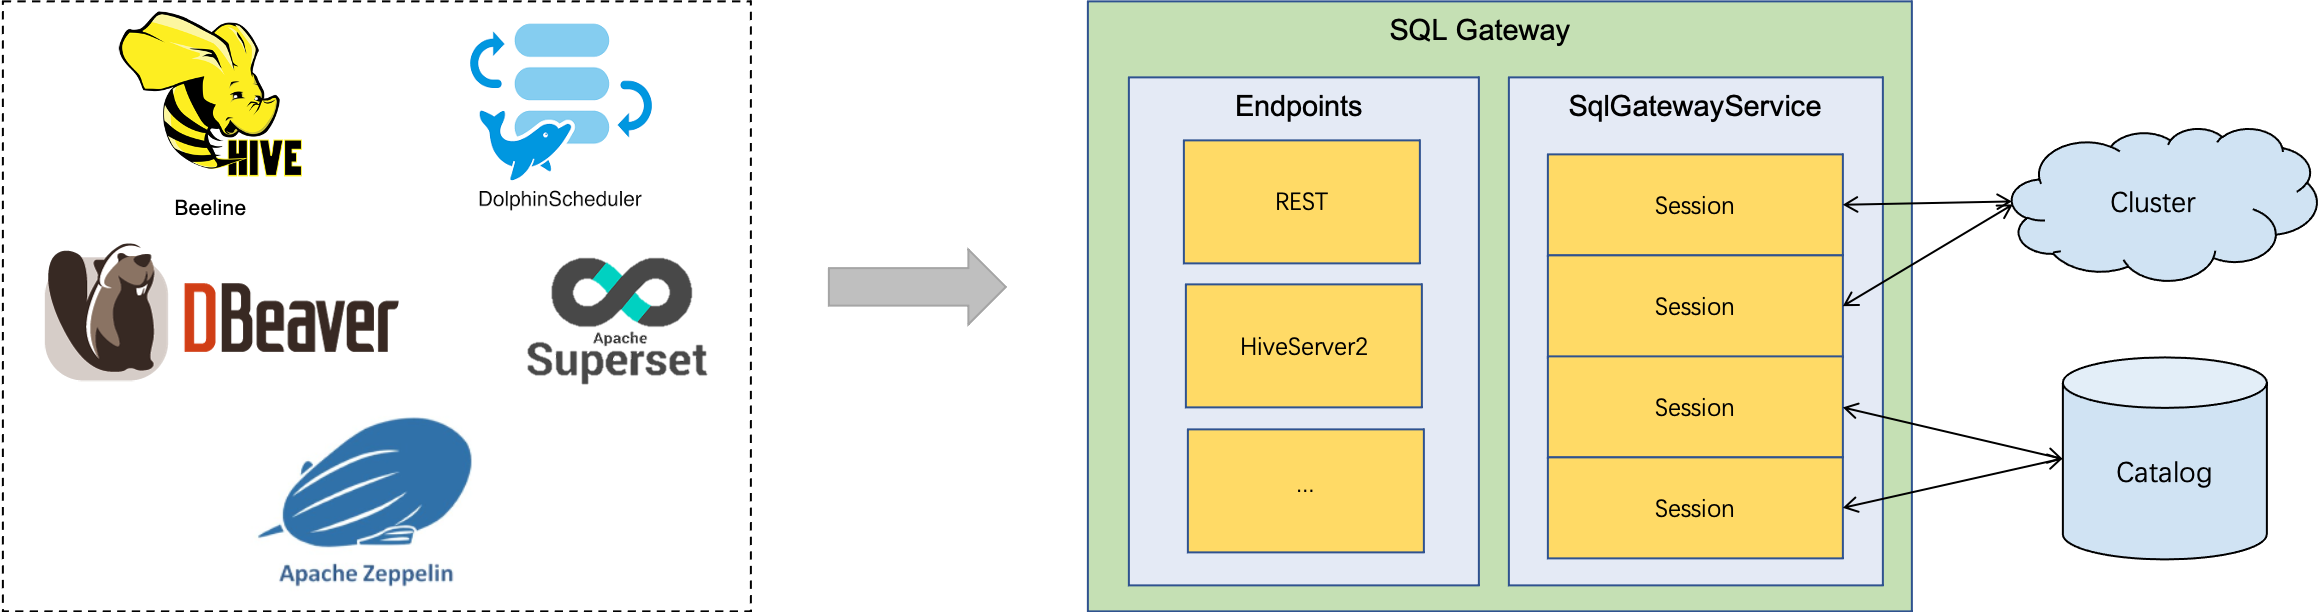 SQL Gateway Architecture